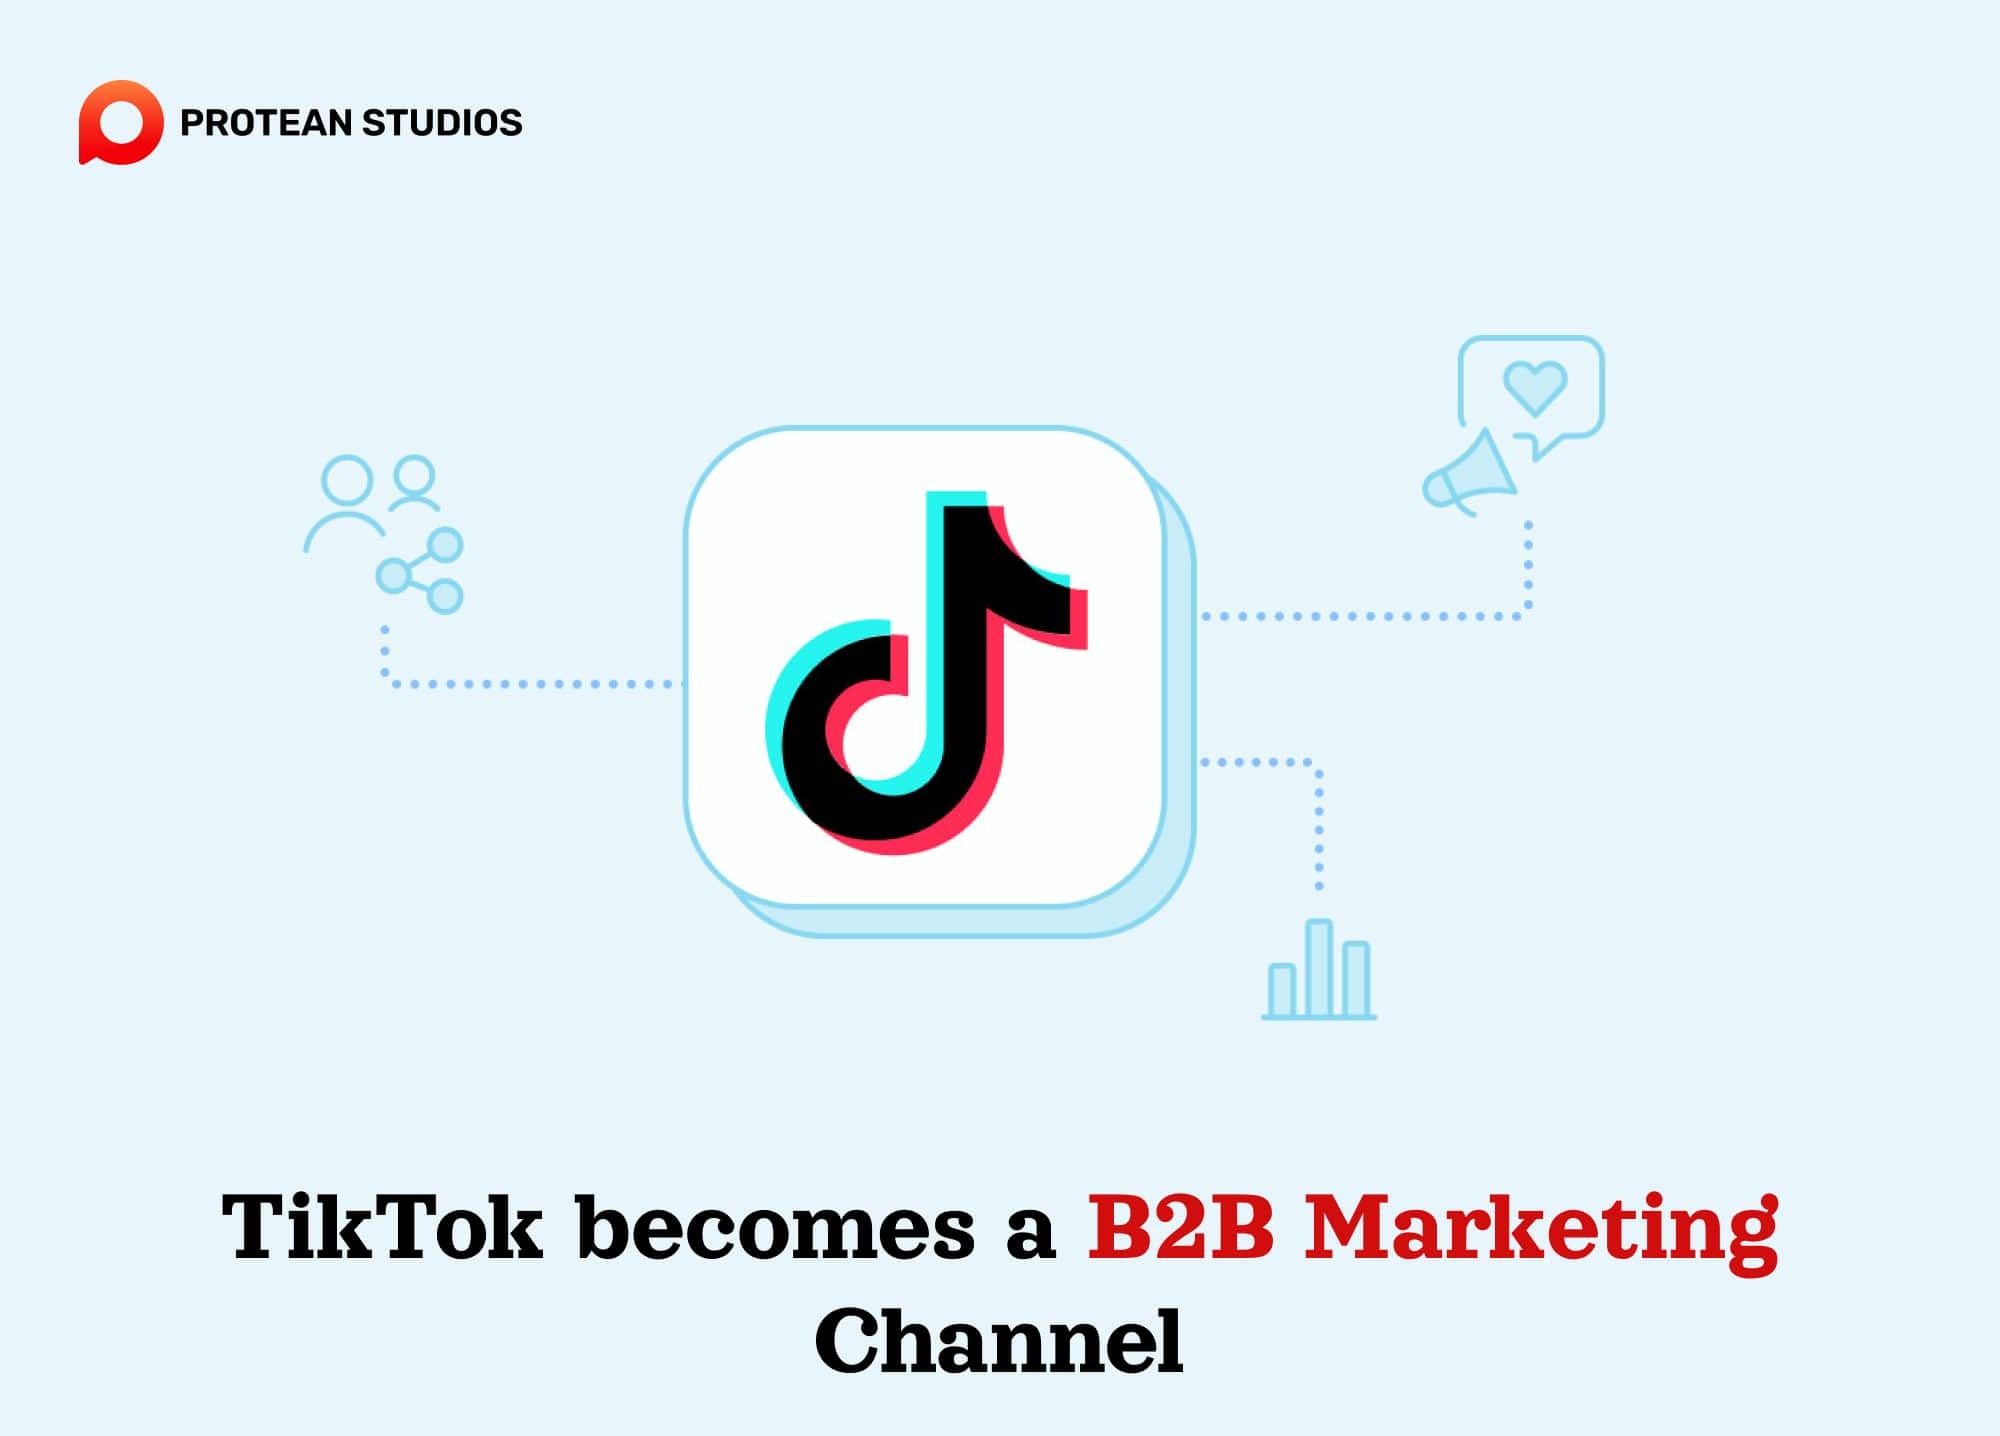 TikTok become a good channel for B2B marketing